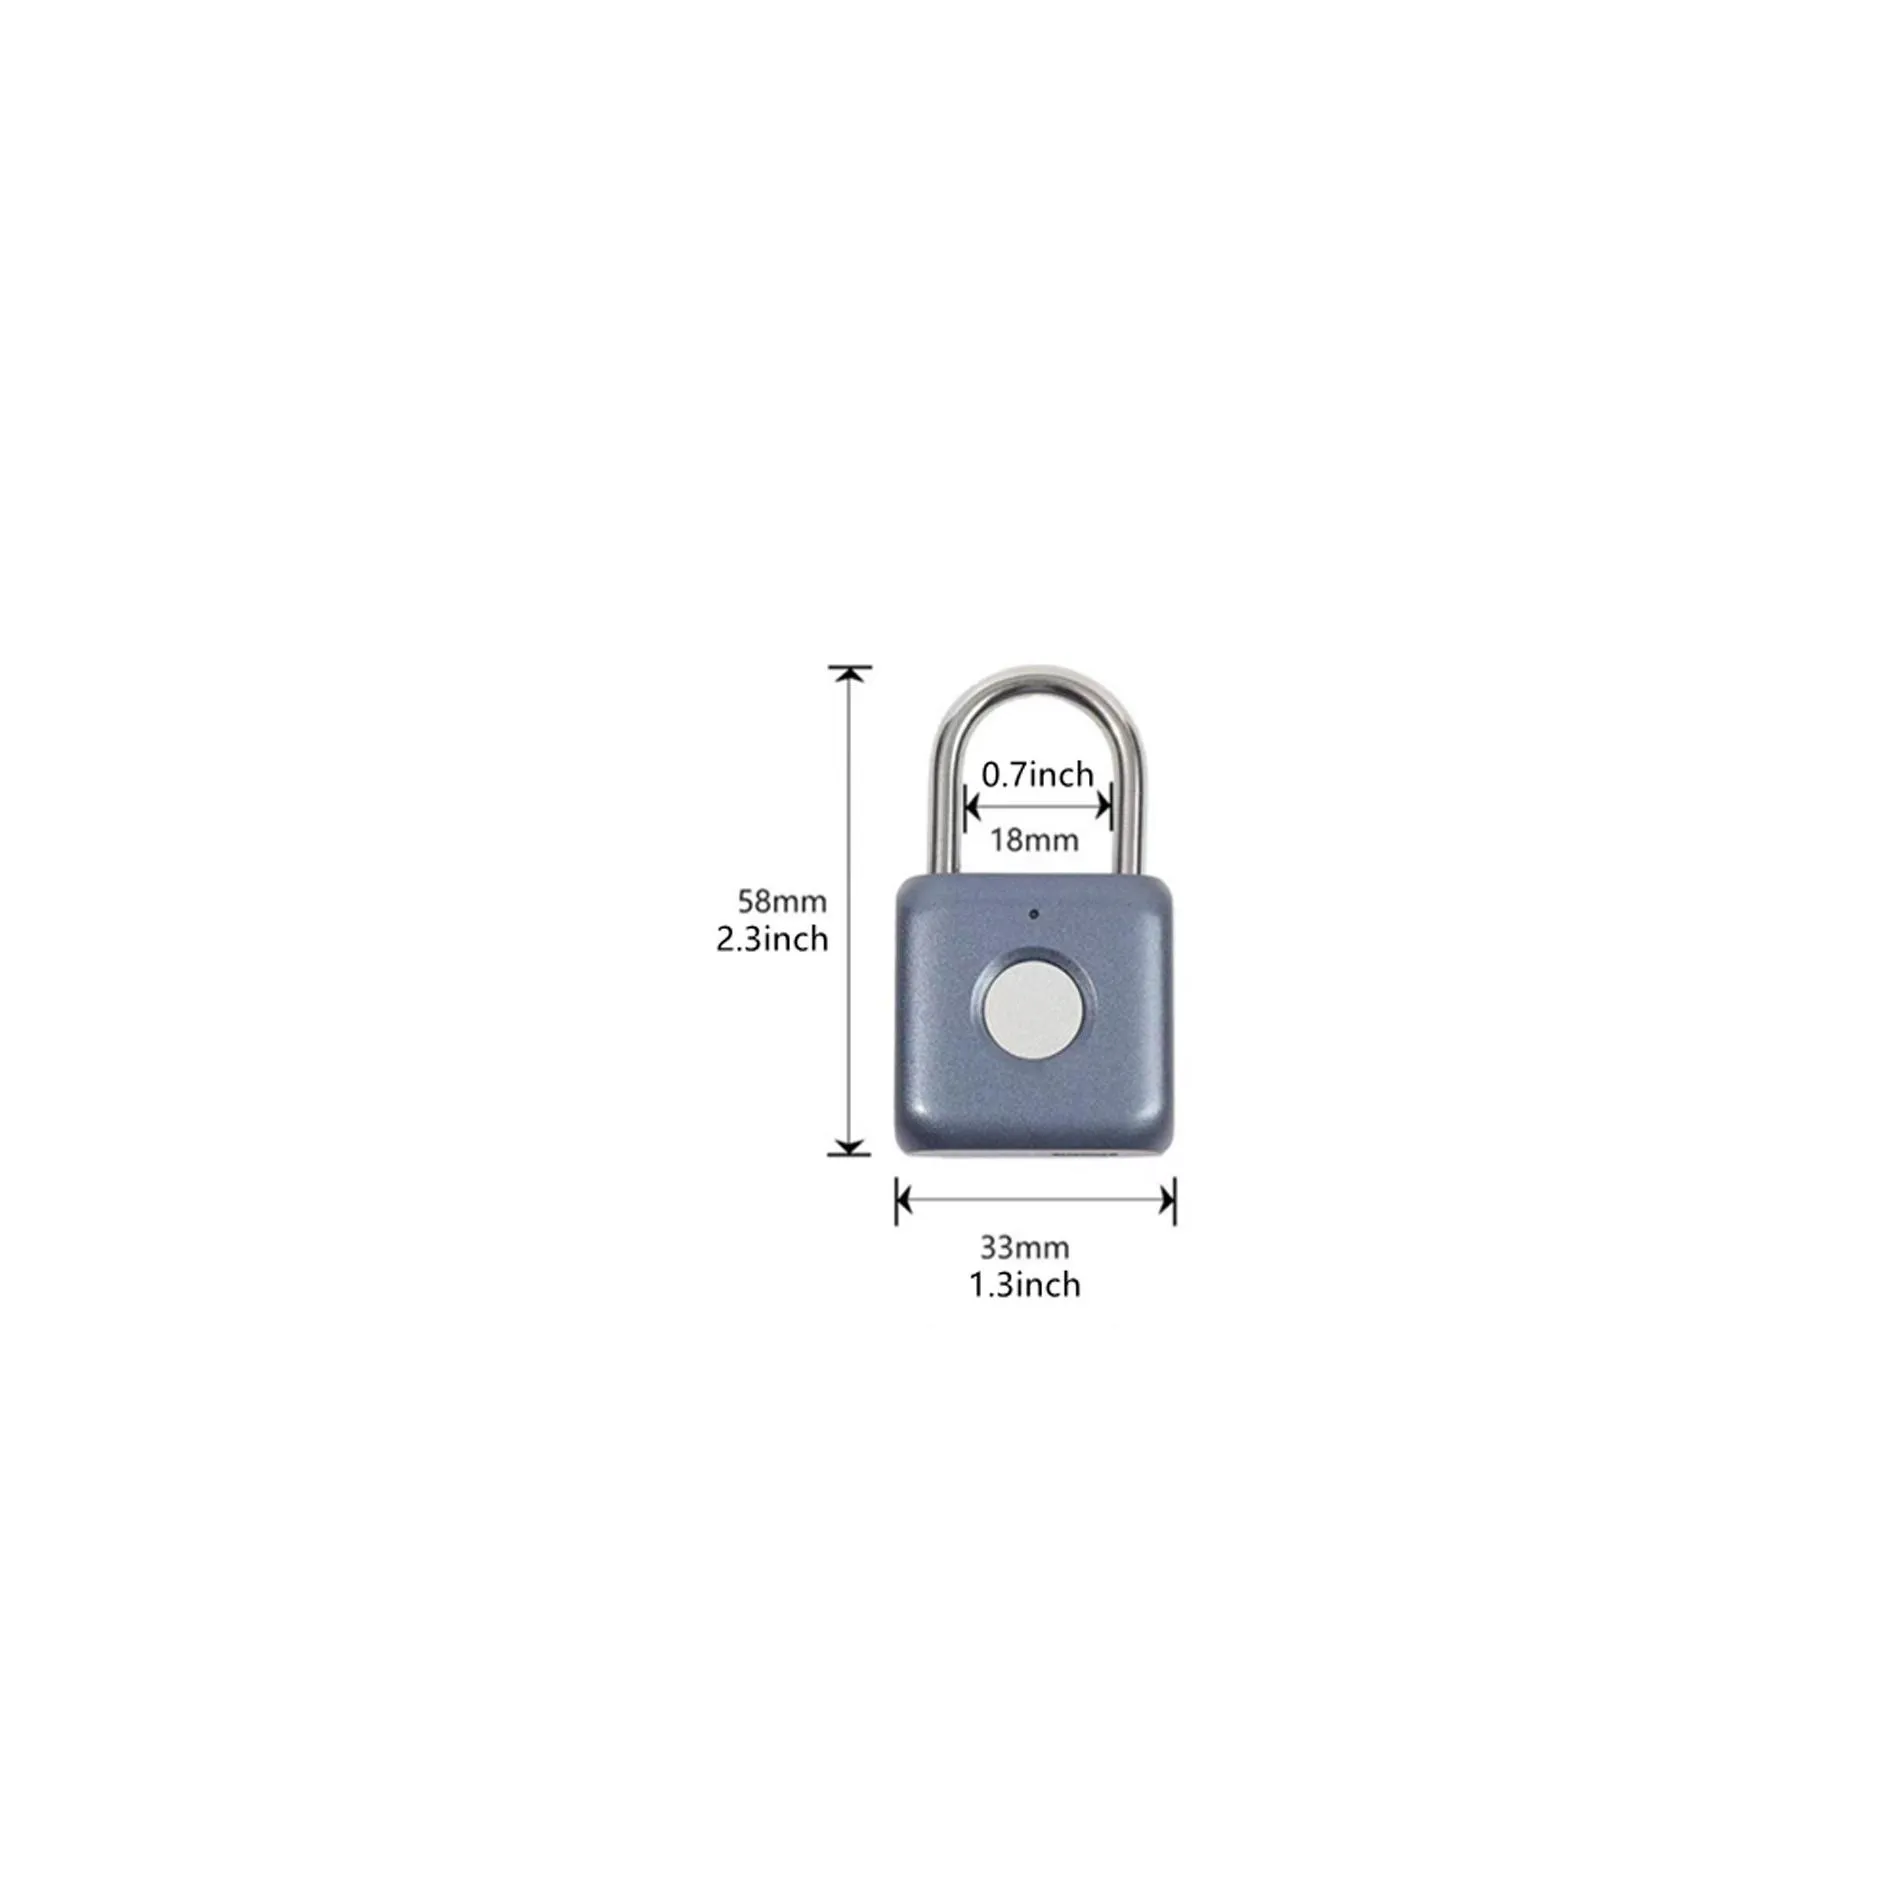 grey door locks smart padlock electronic remote control waterproof fingerprint padlock with key